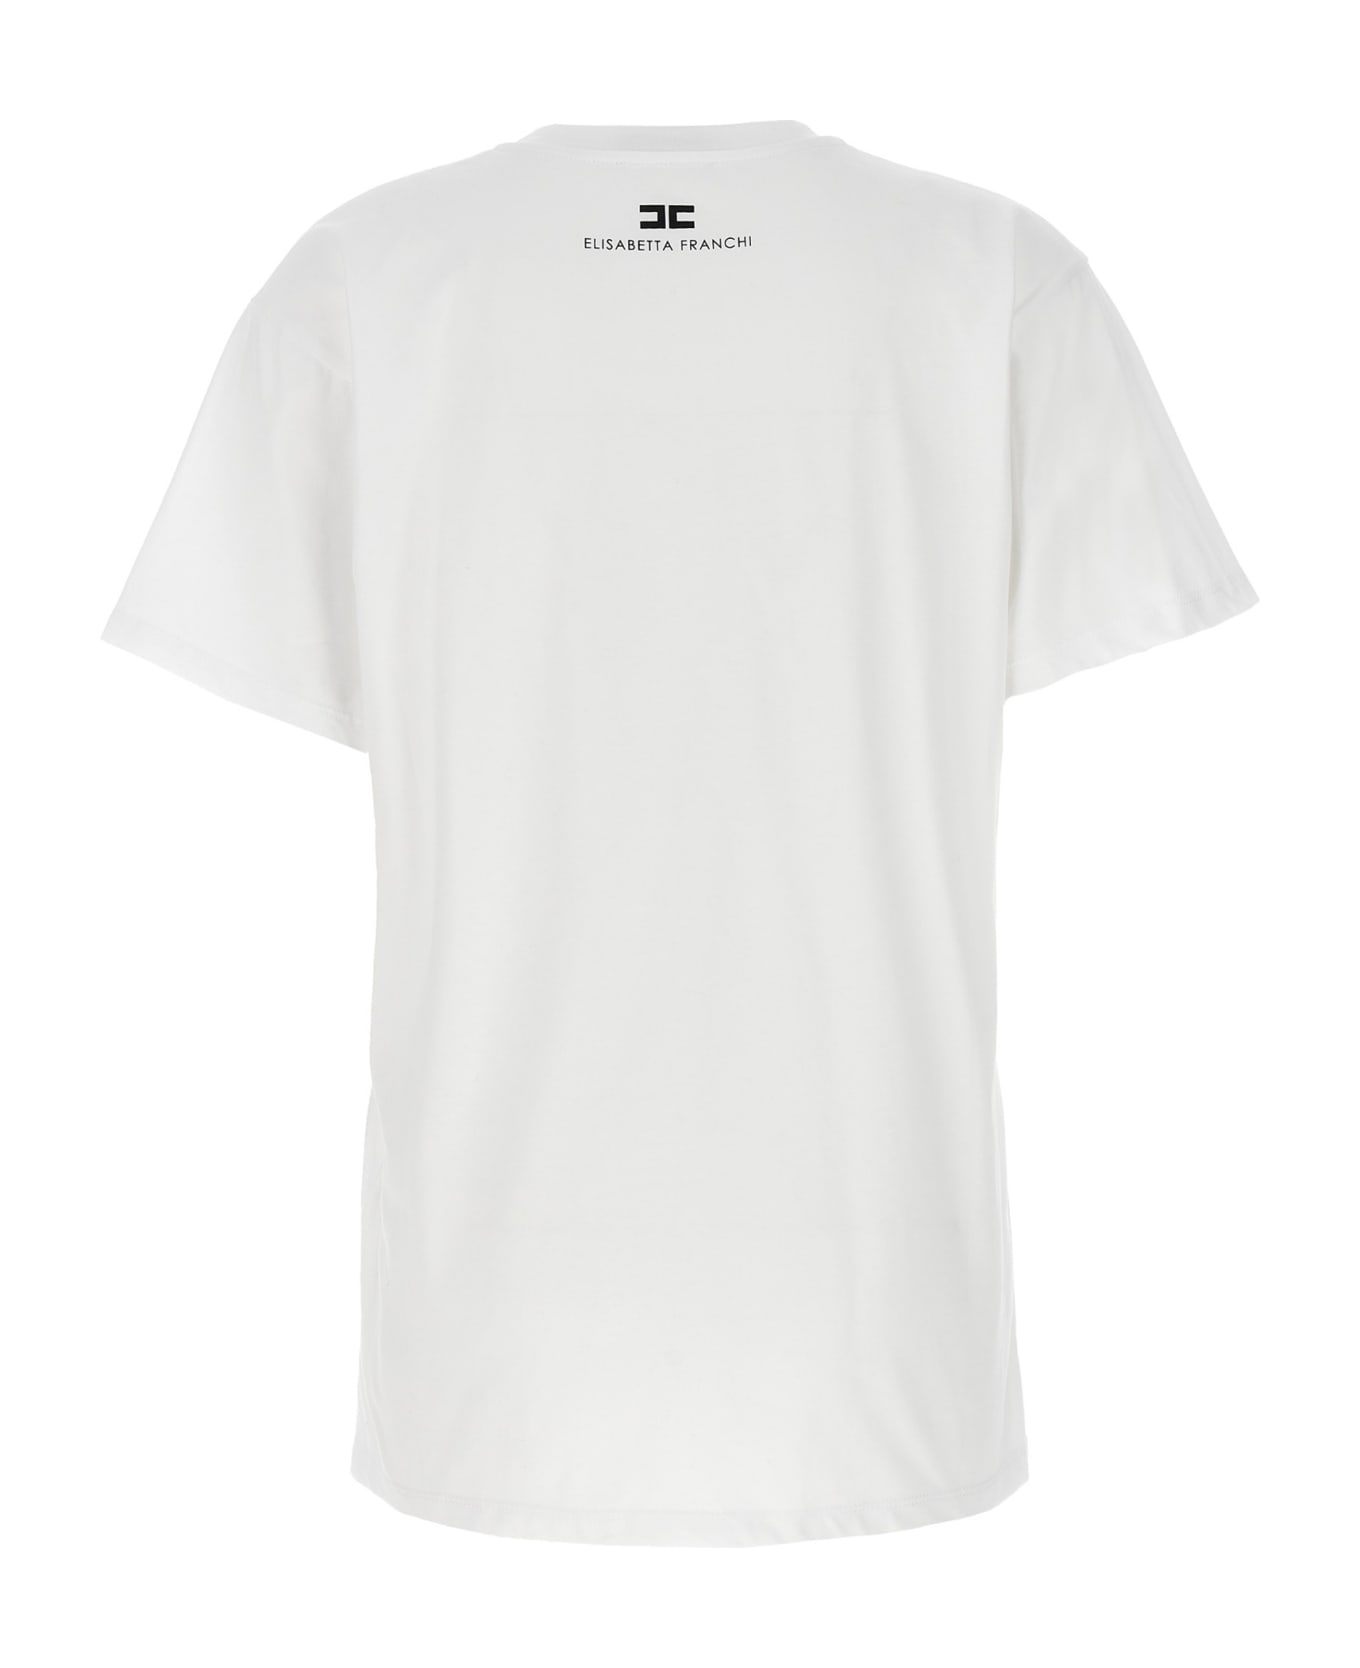 Elisabetta Franchi Printed T-shirt - White Tシャツ